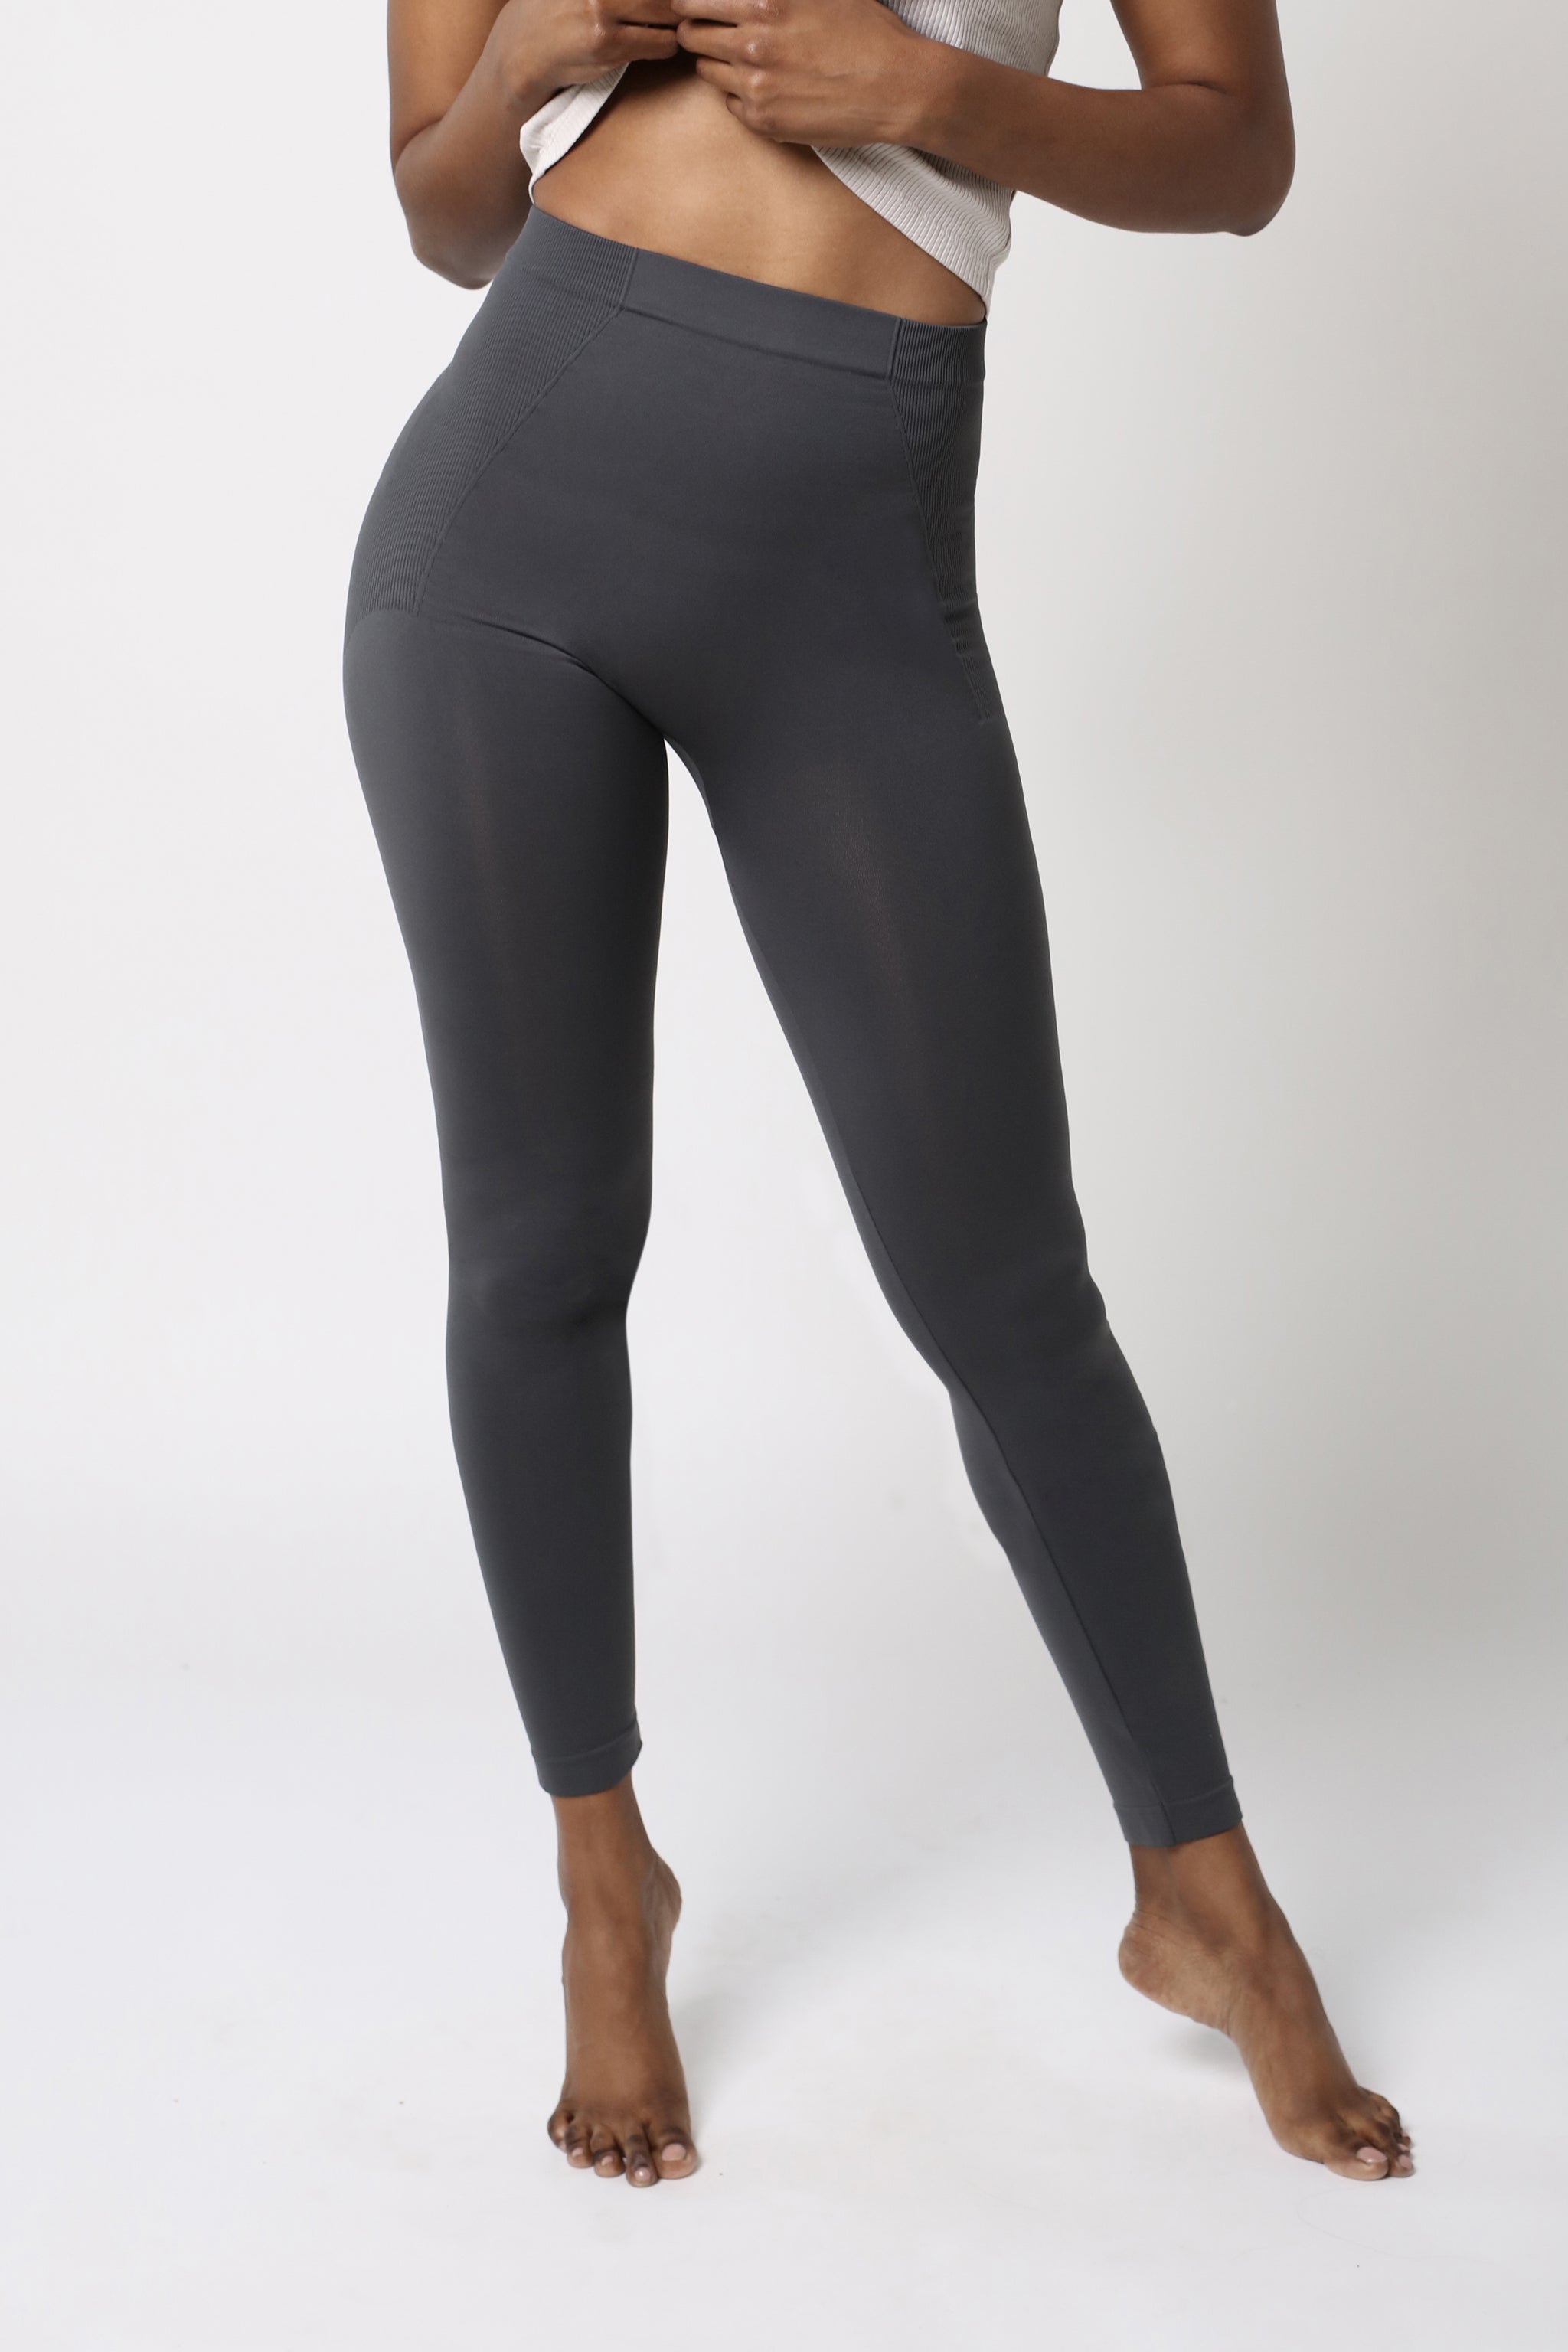 legging for women - Charcoal grey